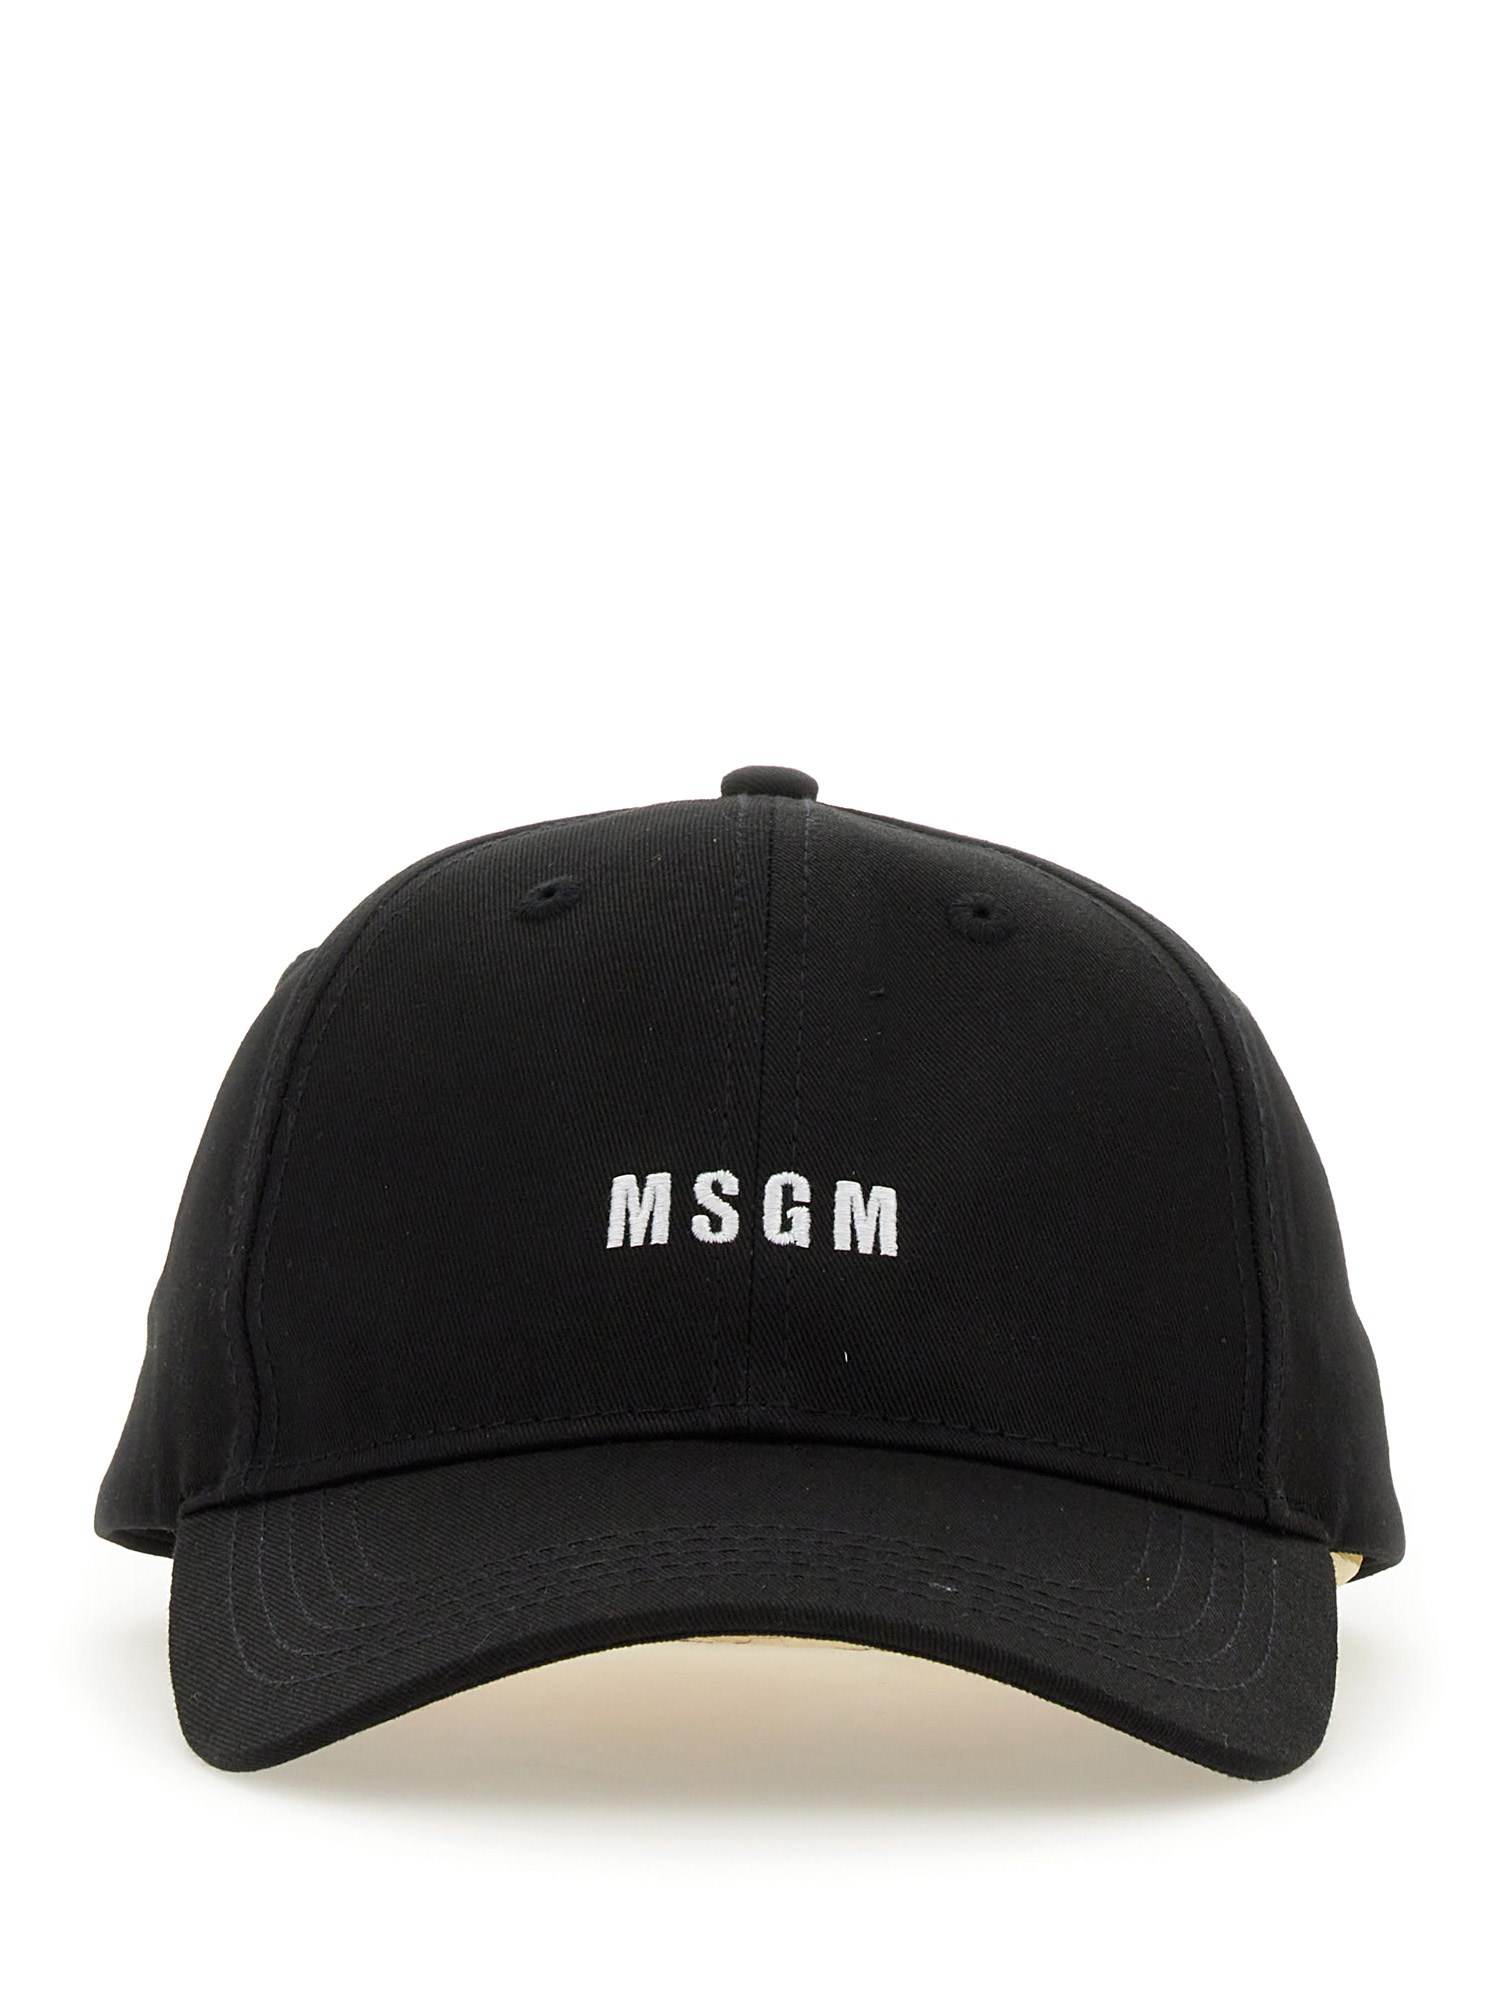 msgm baseball hat with logo